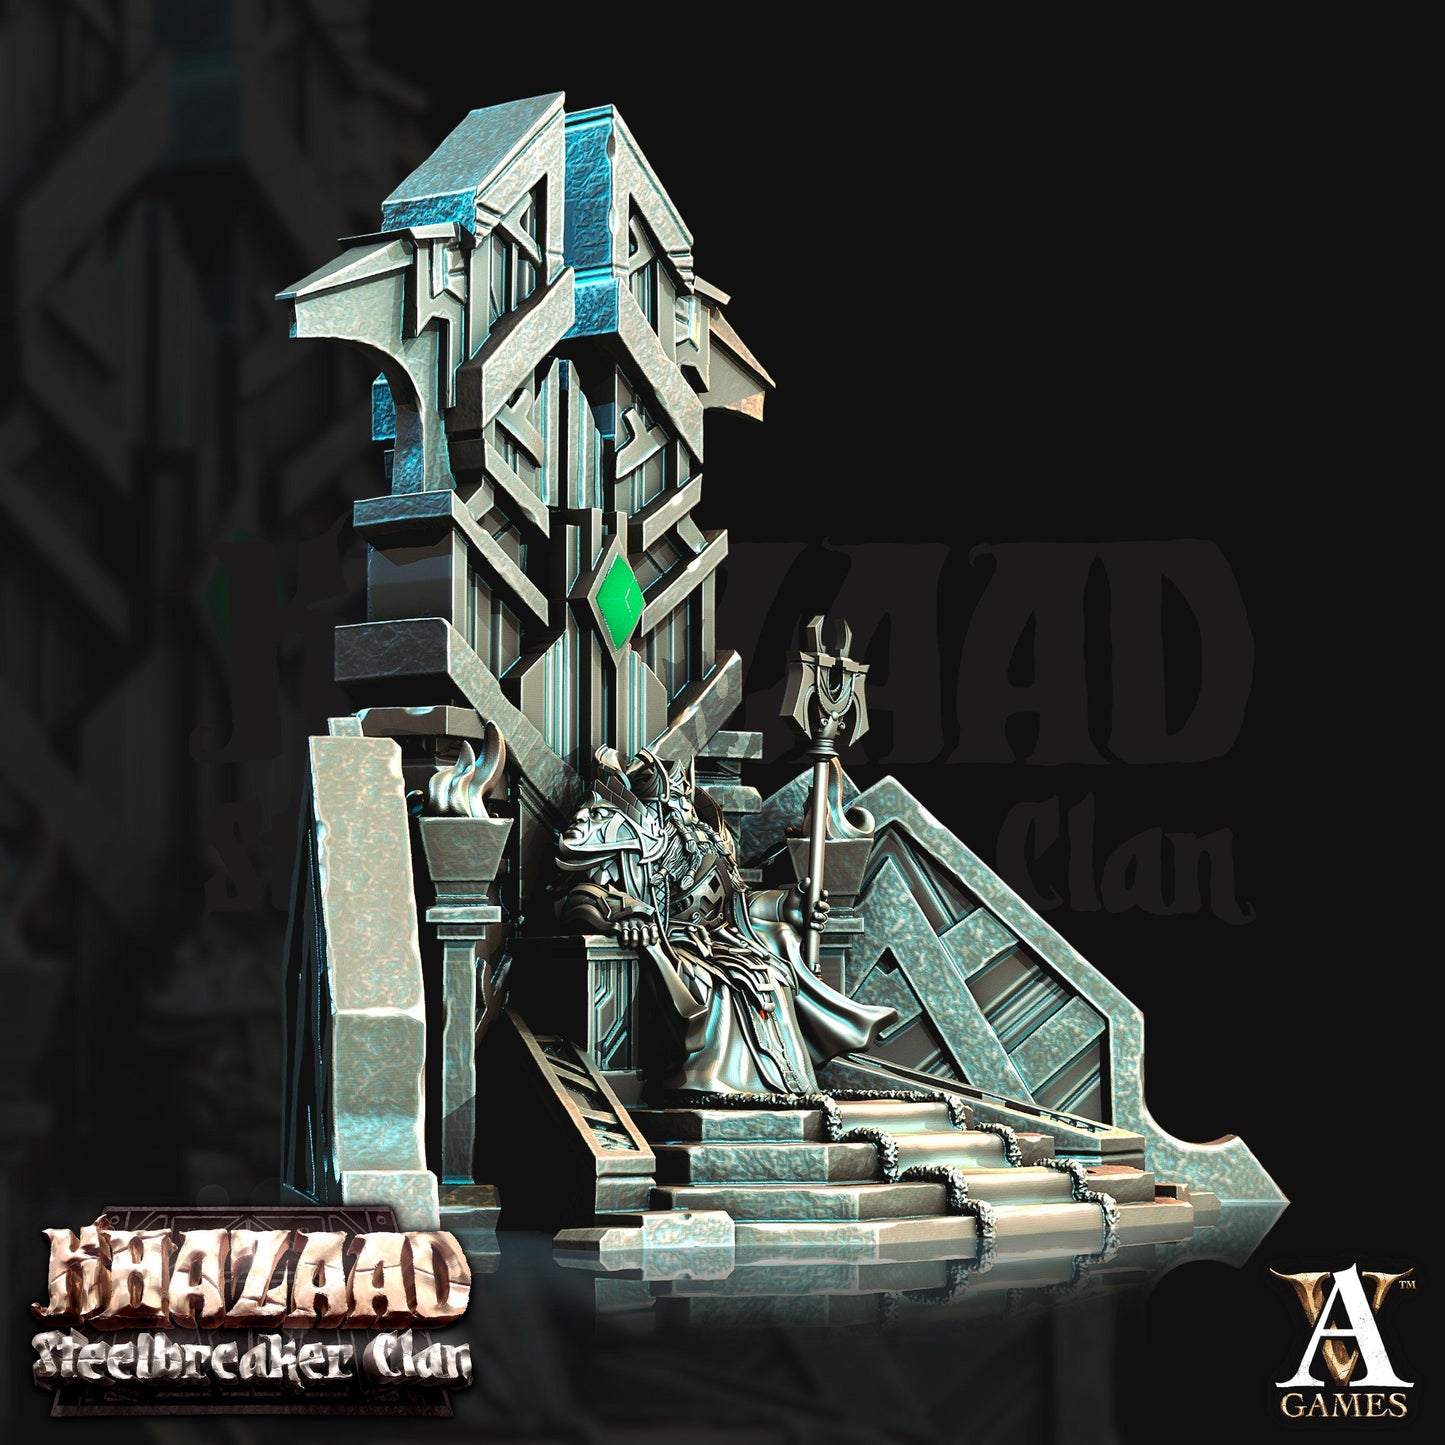 King Thrag Steelhammer - Khazaad Stealbreaker Clan - TODO ROL SPAIN 